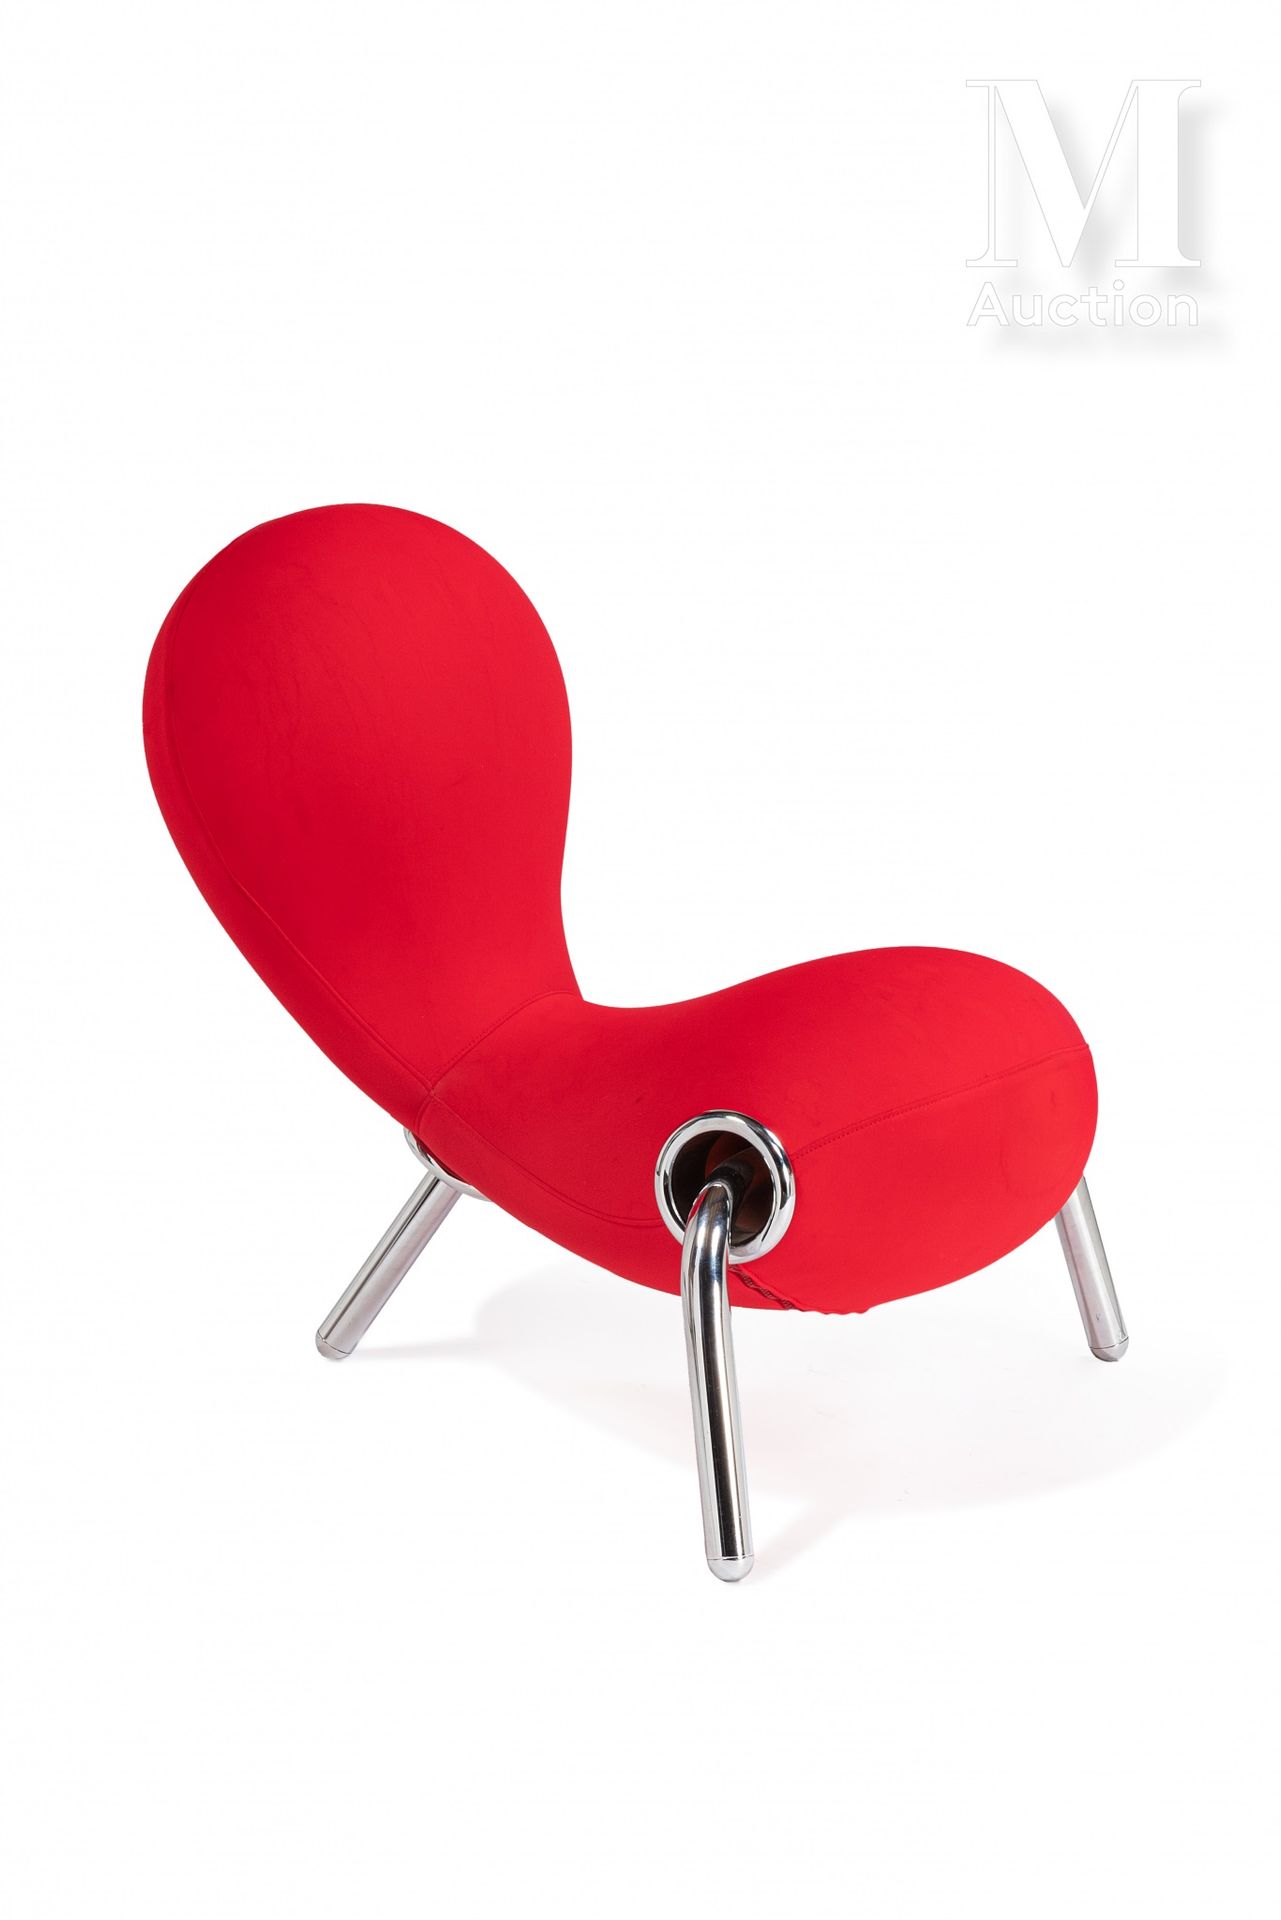 Marc NEWSON (né en 1963) "胚胎

扶手椅，镀铬金属结构和三角架。

座椅和靠背由红色氯丁橡胶覆盖。

81 x 70 x 80厘米

&hellip;